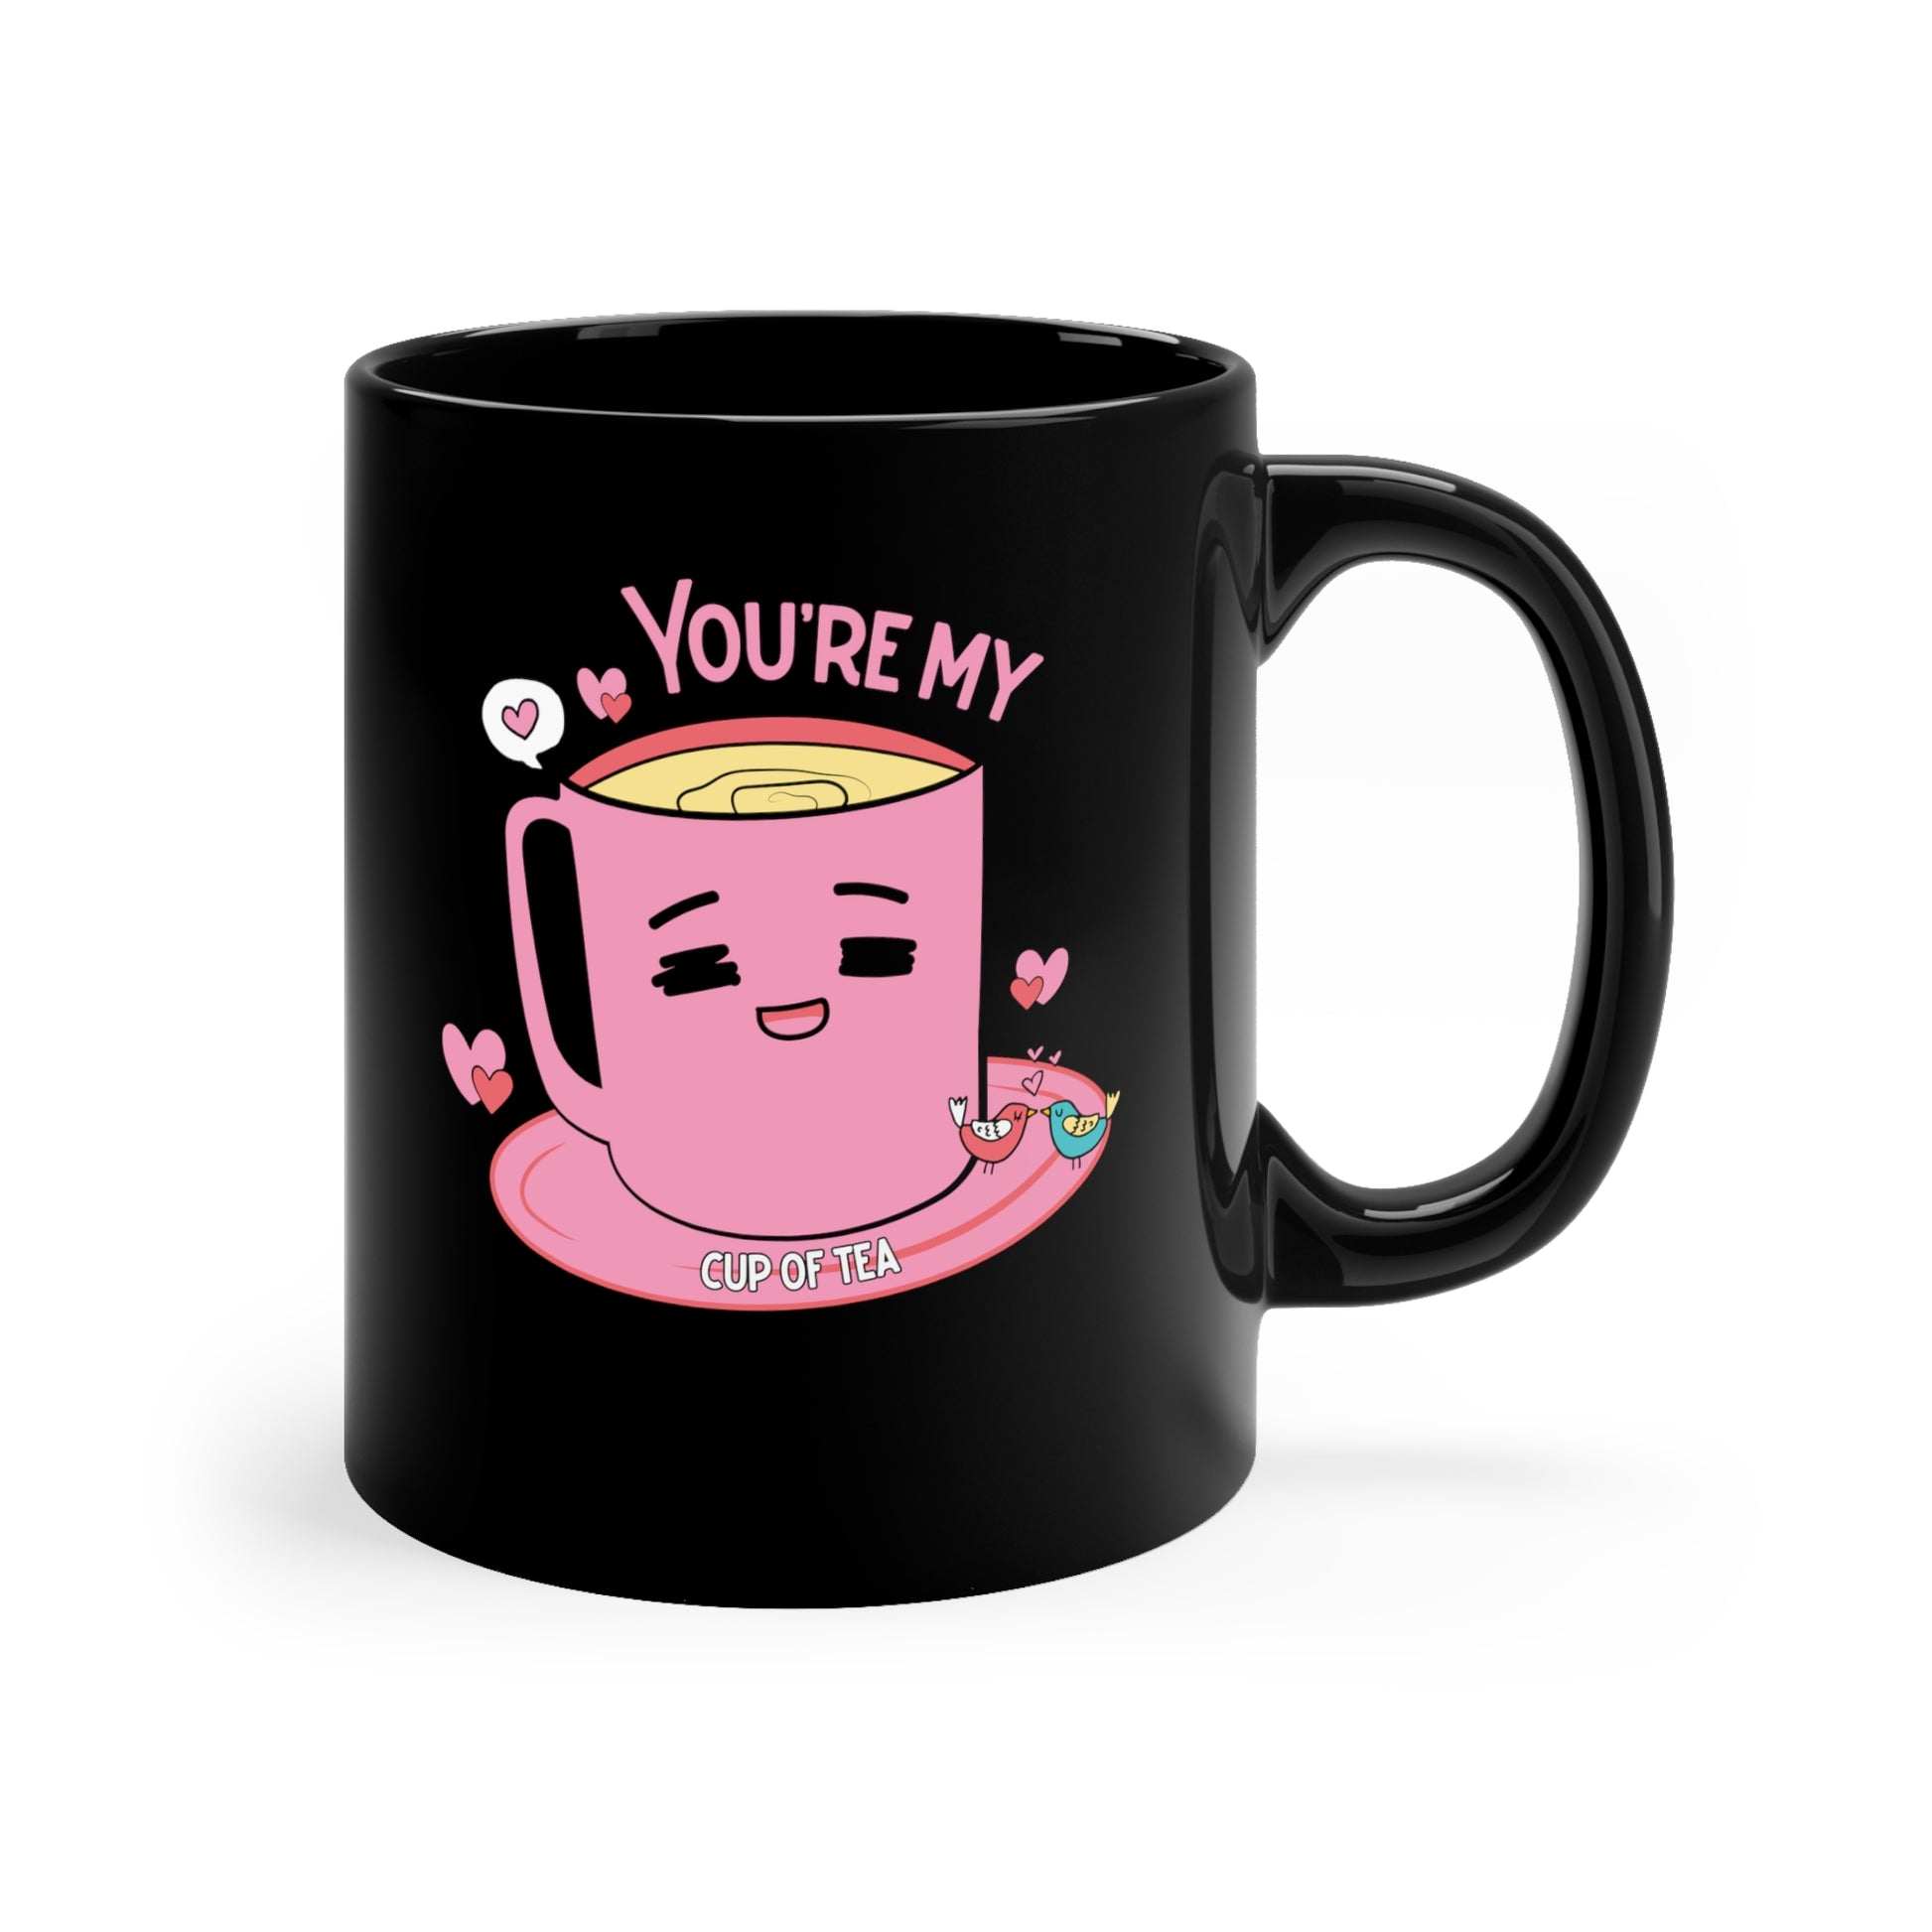 you're my cup of tea coffee mug, cute mug for coffee and tea lovers